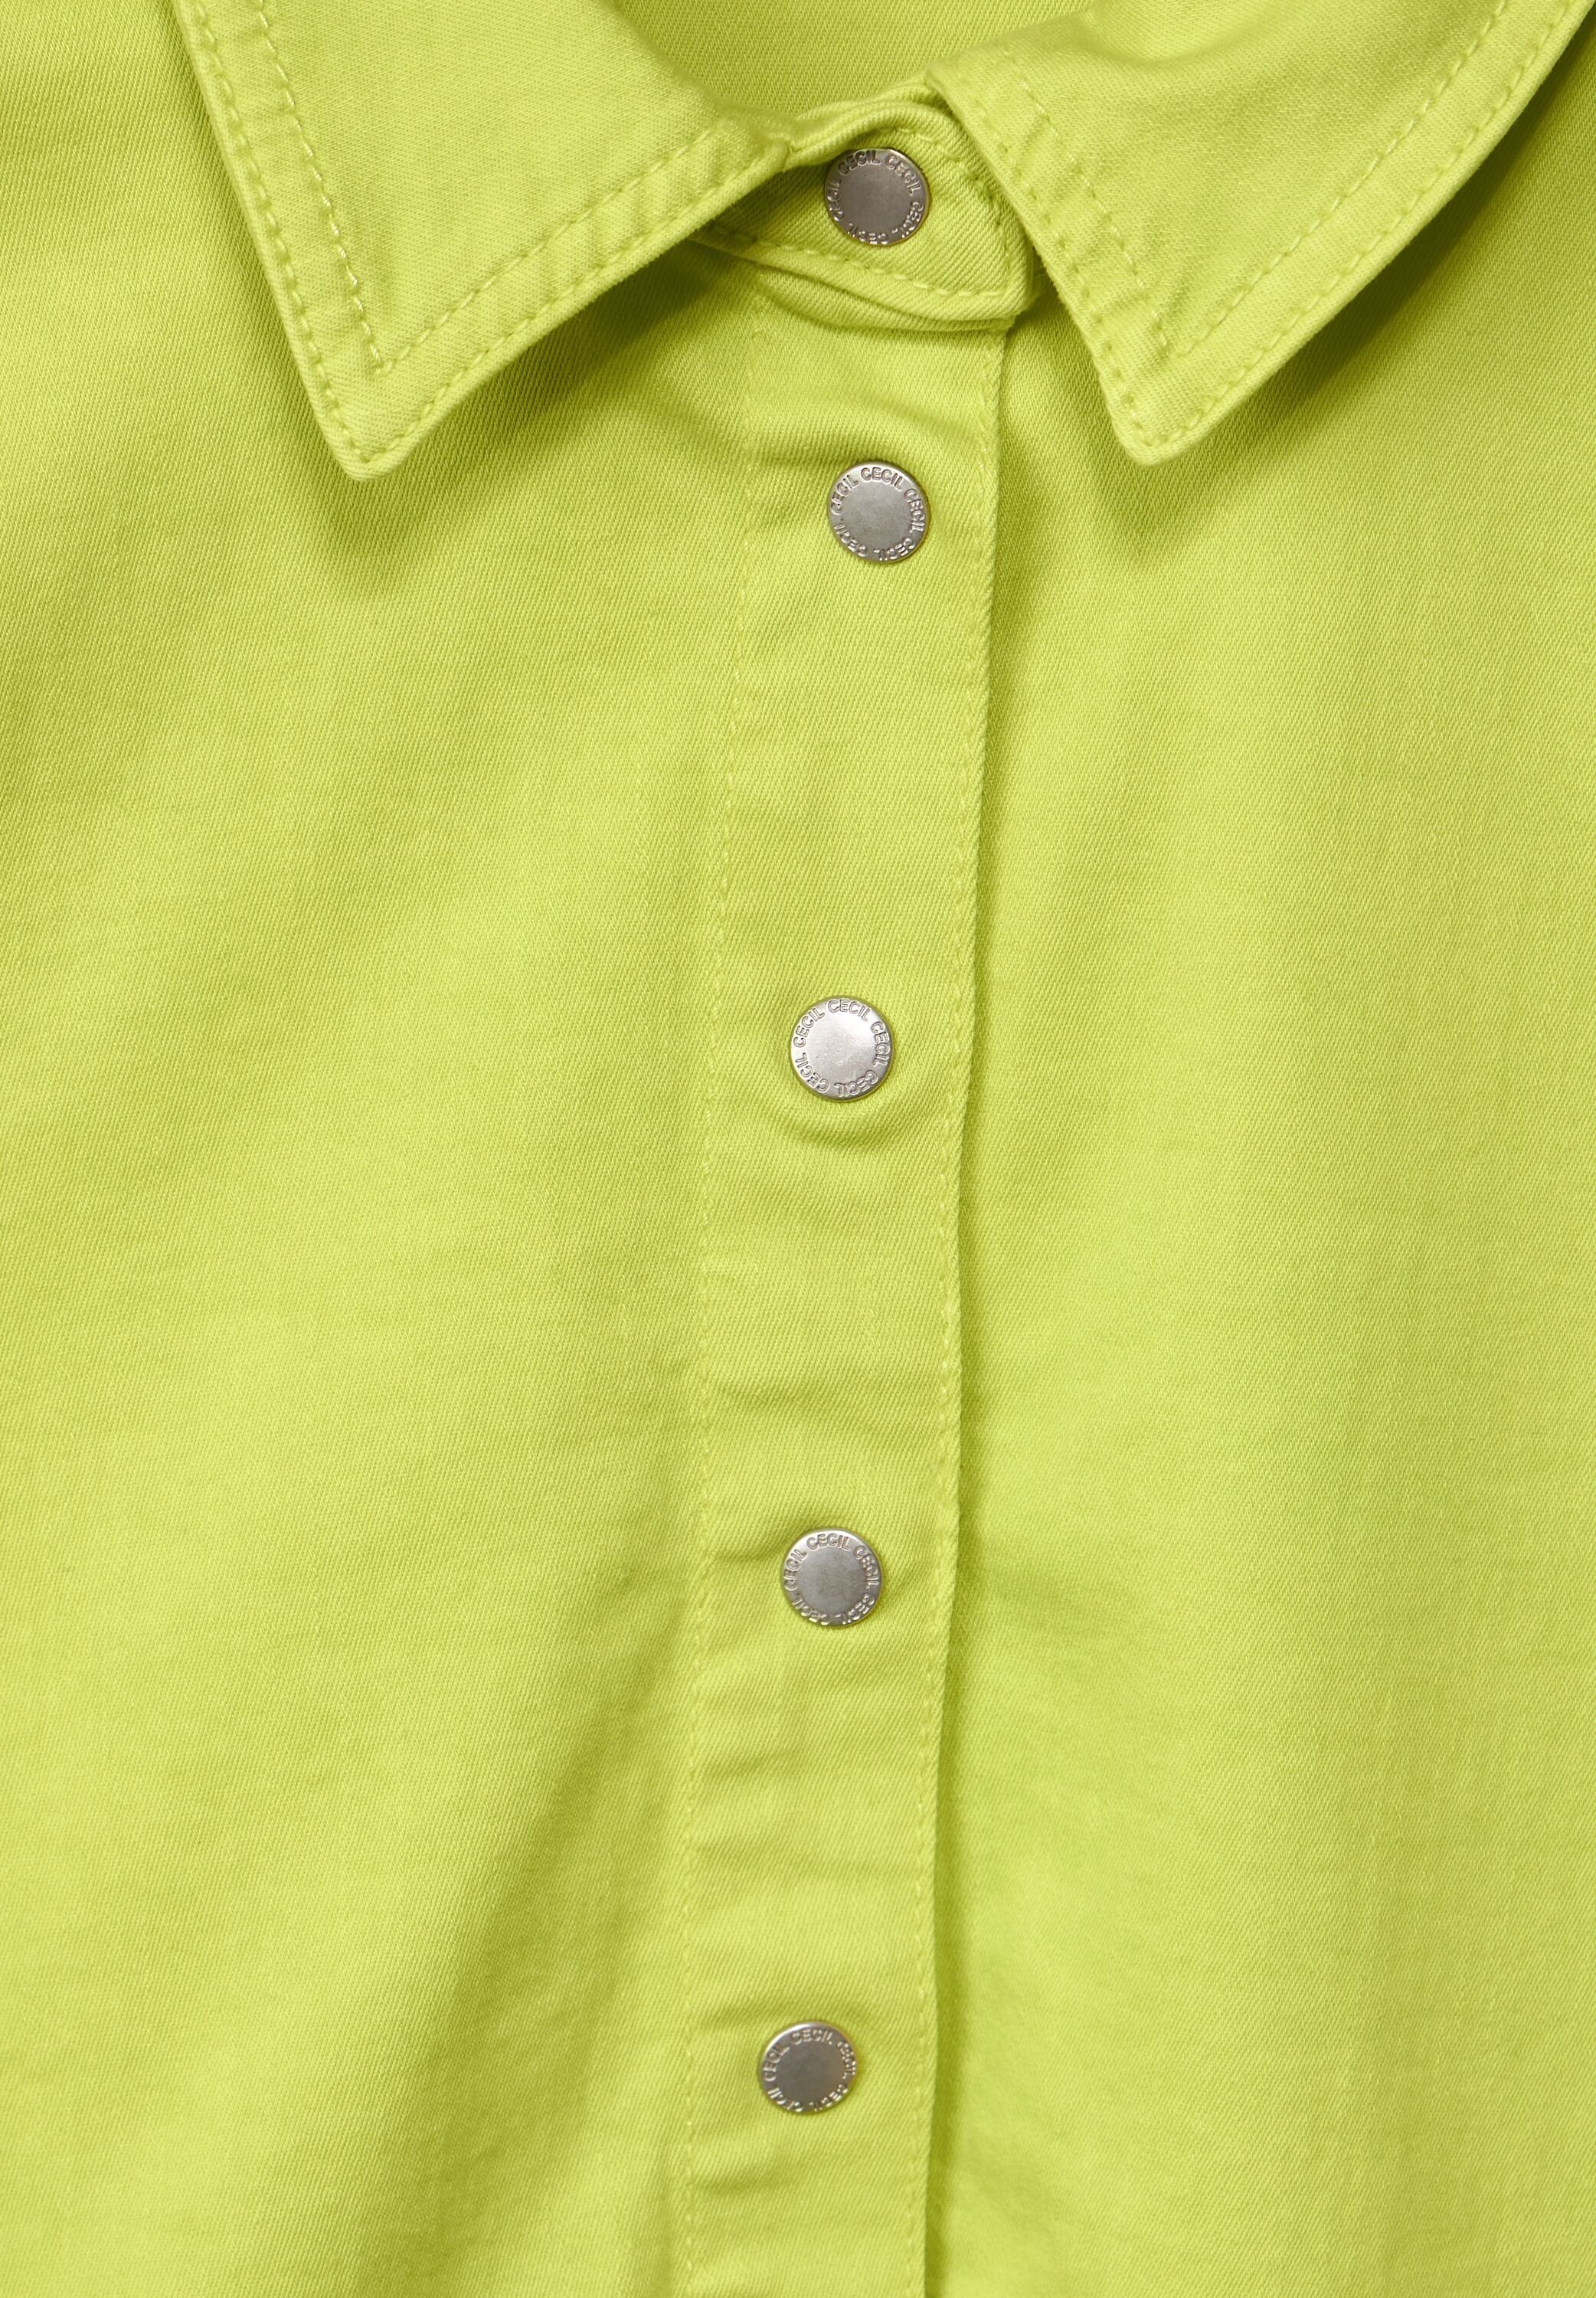 yellow Hemdblusen-Style Cecil Jeanskleid im limelight